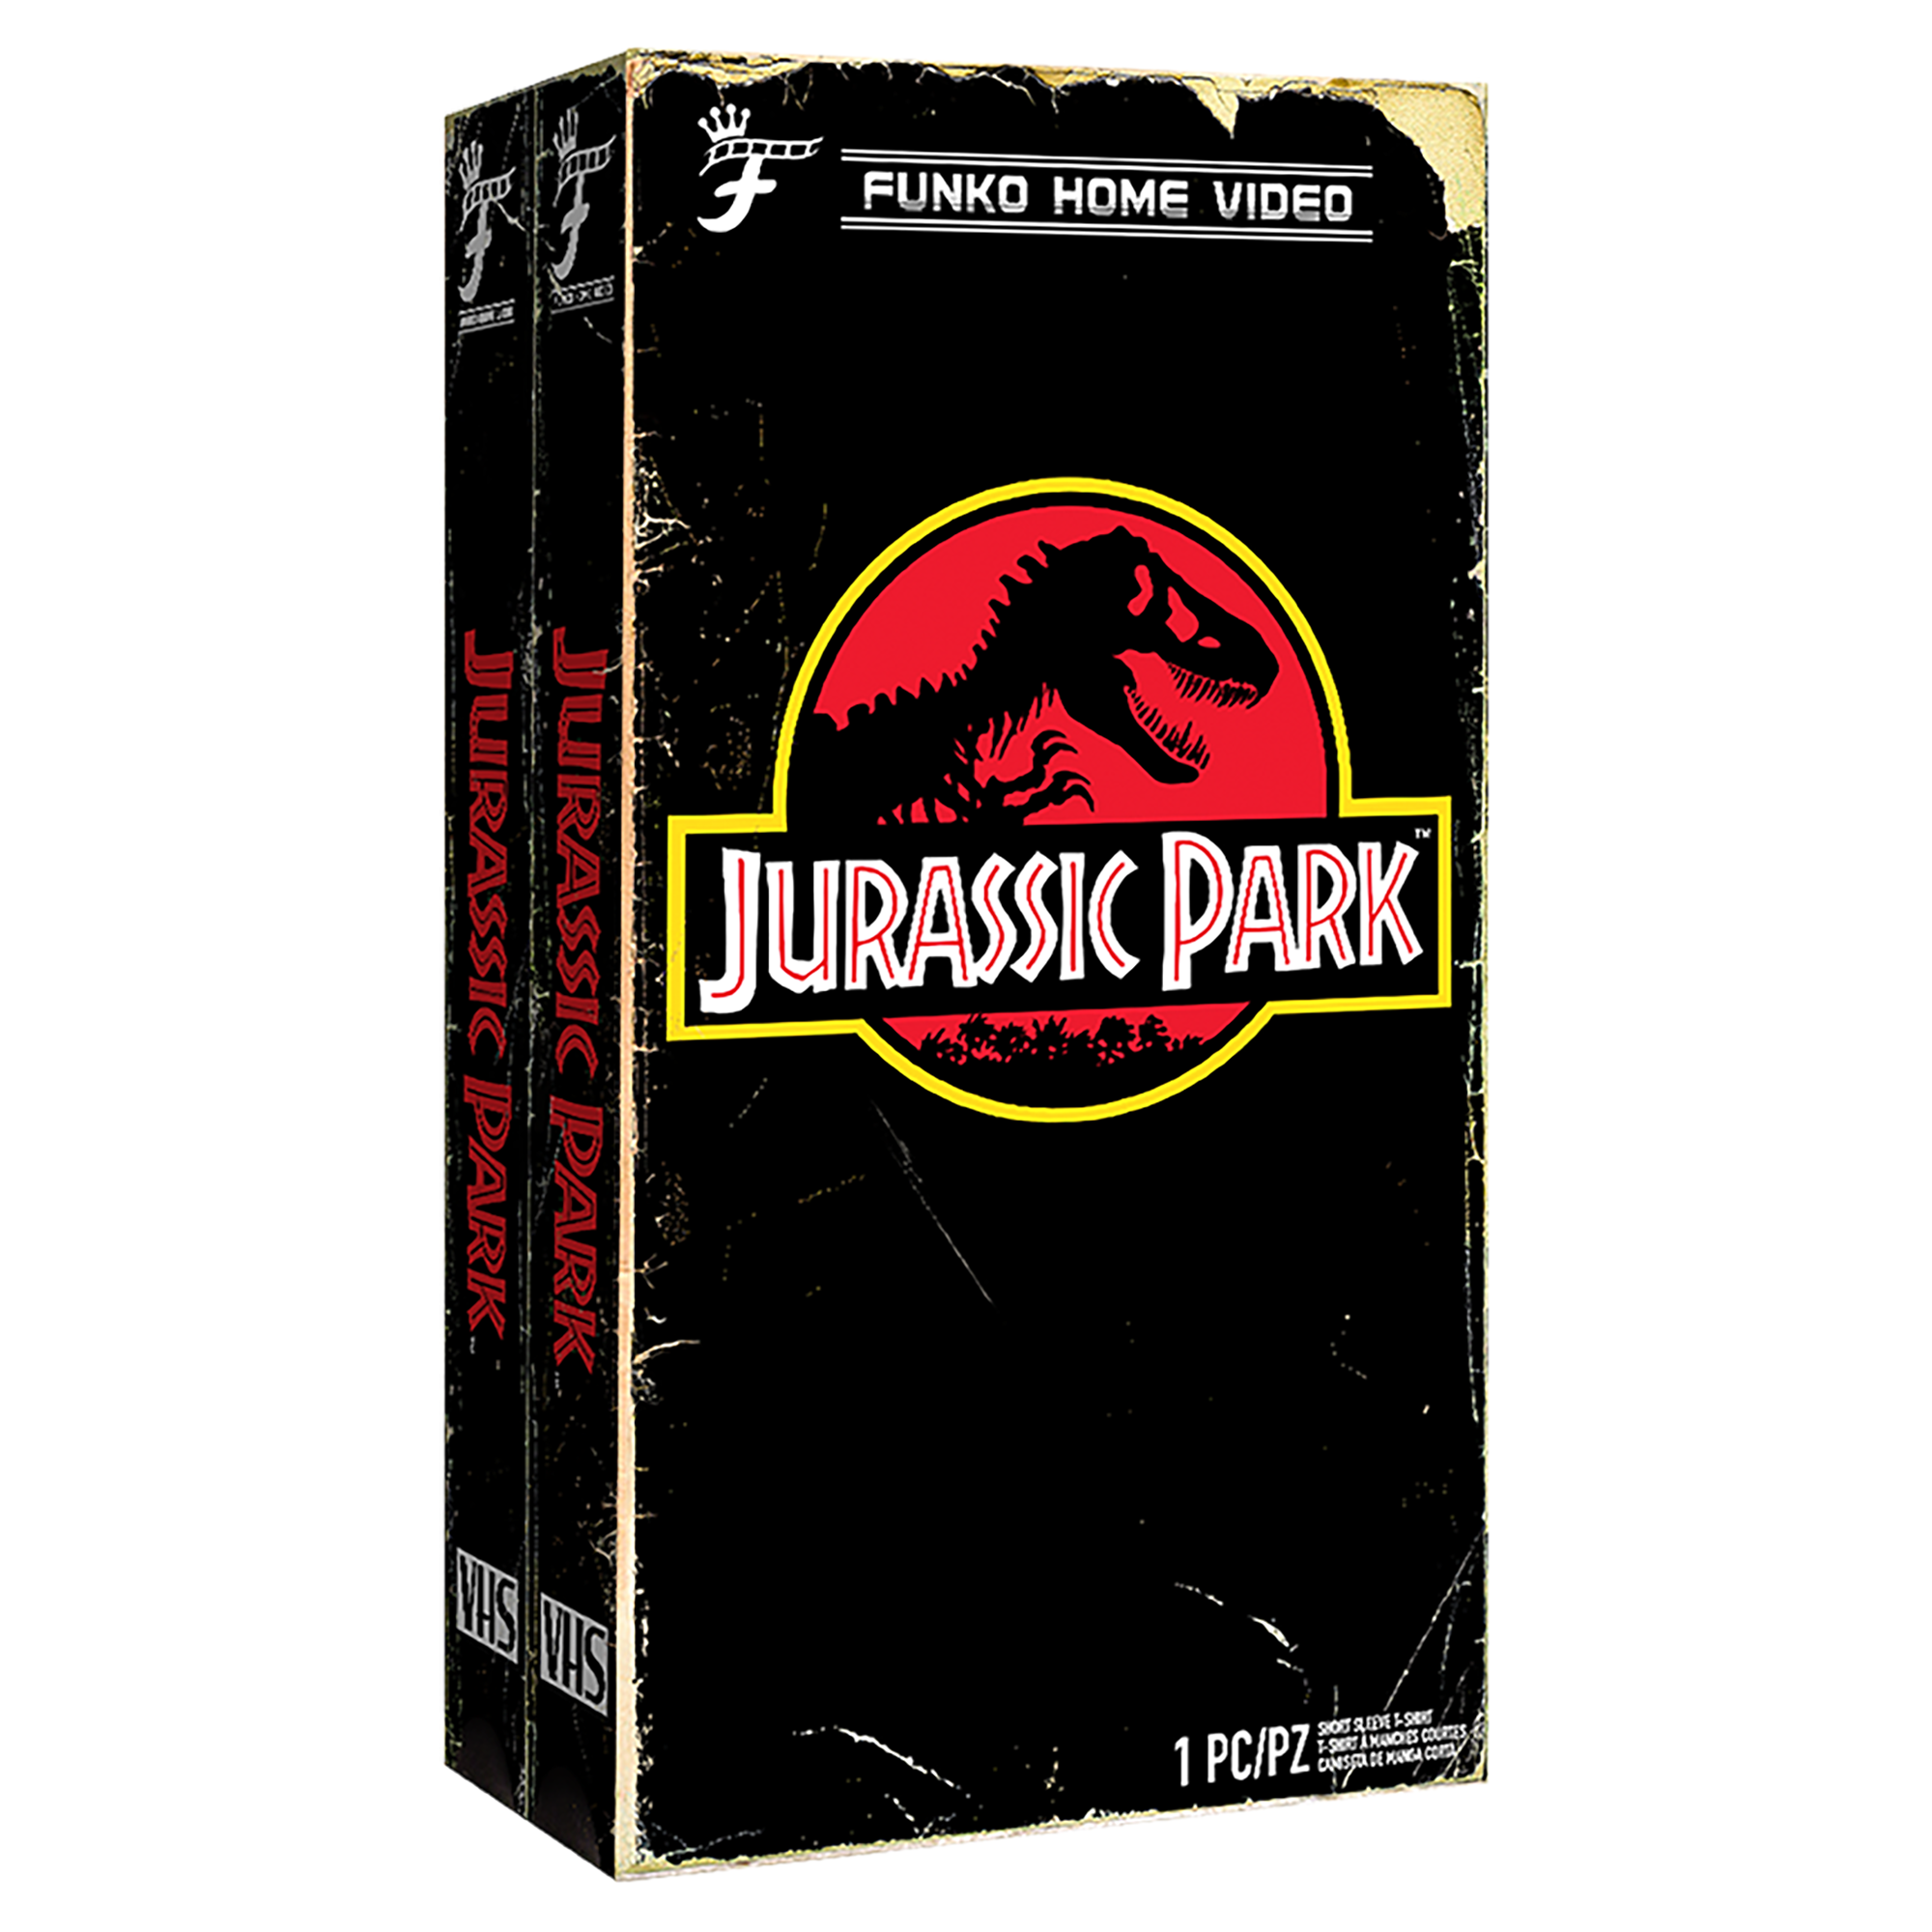 JURASSIC PARK - VHS BOXED TEE - JURASSIC PARK LOGO